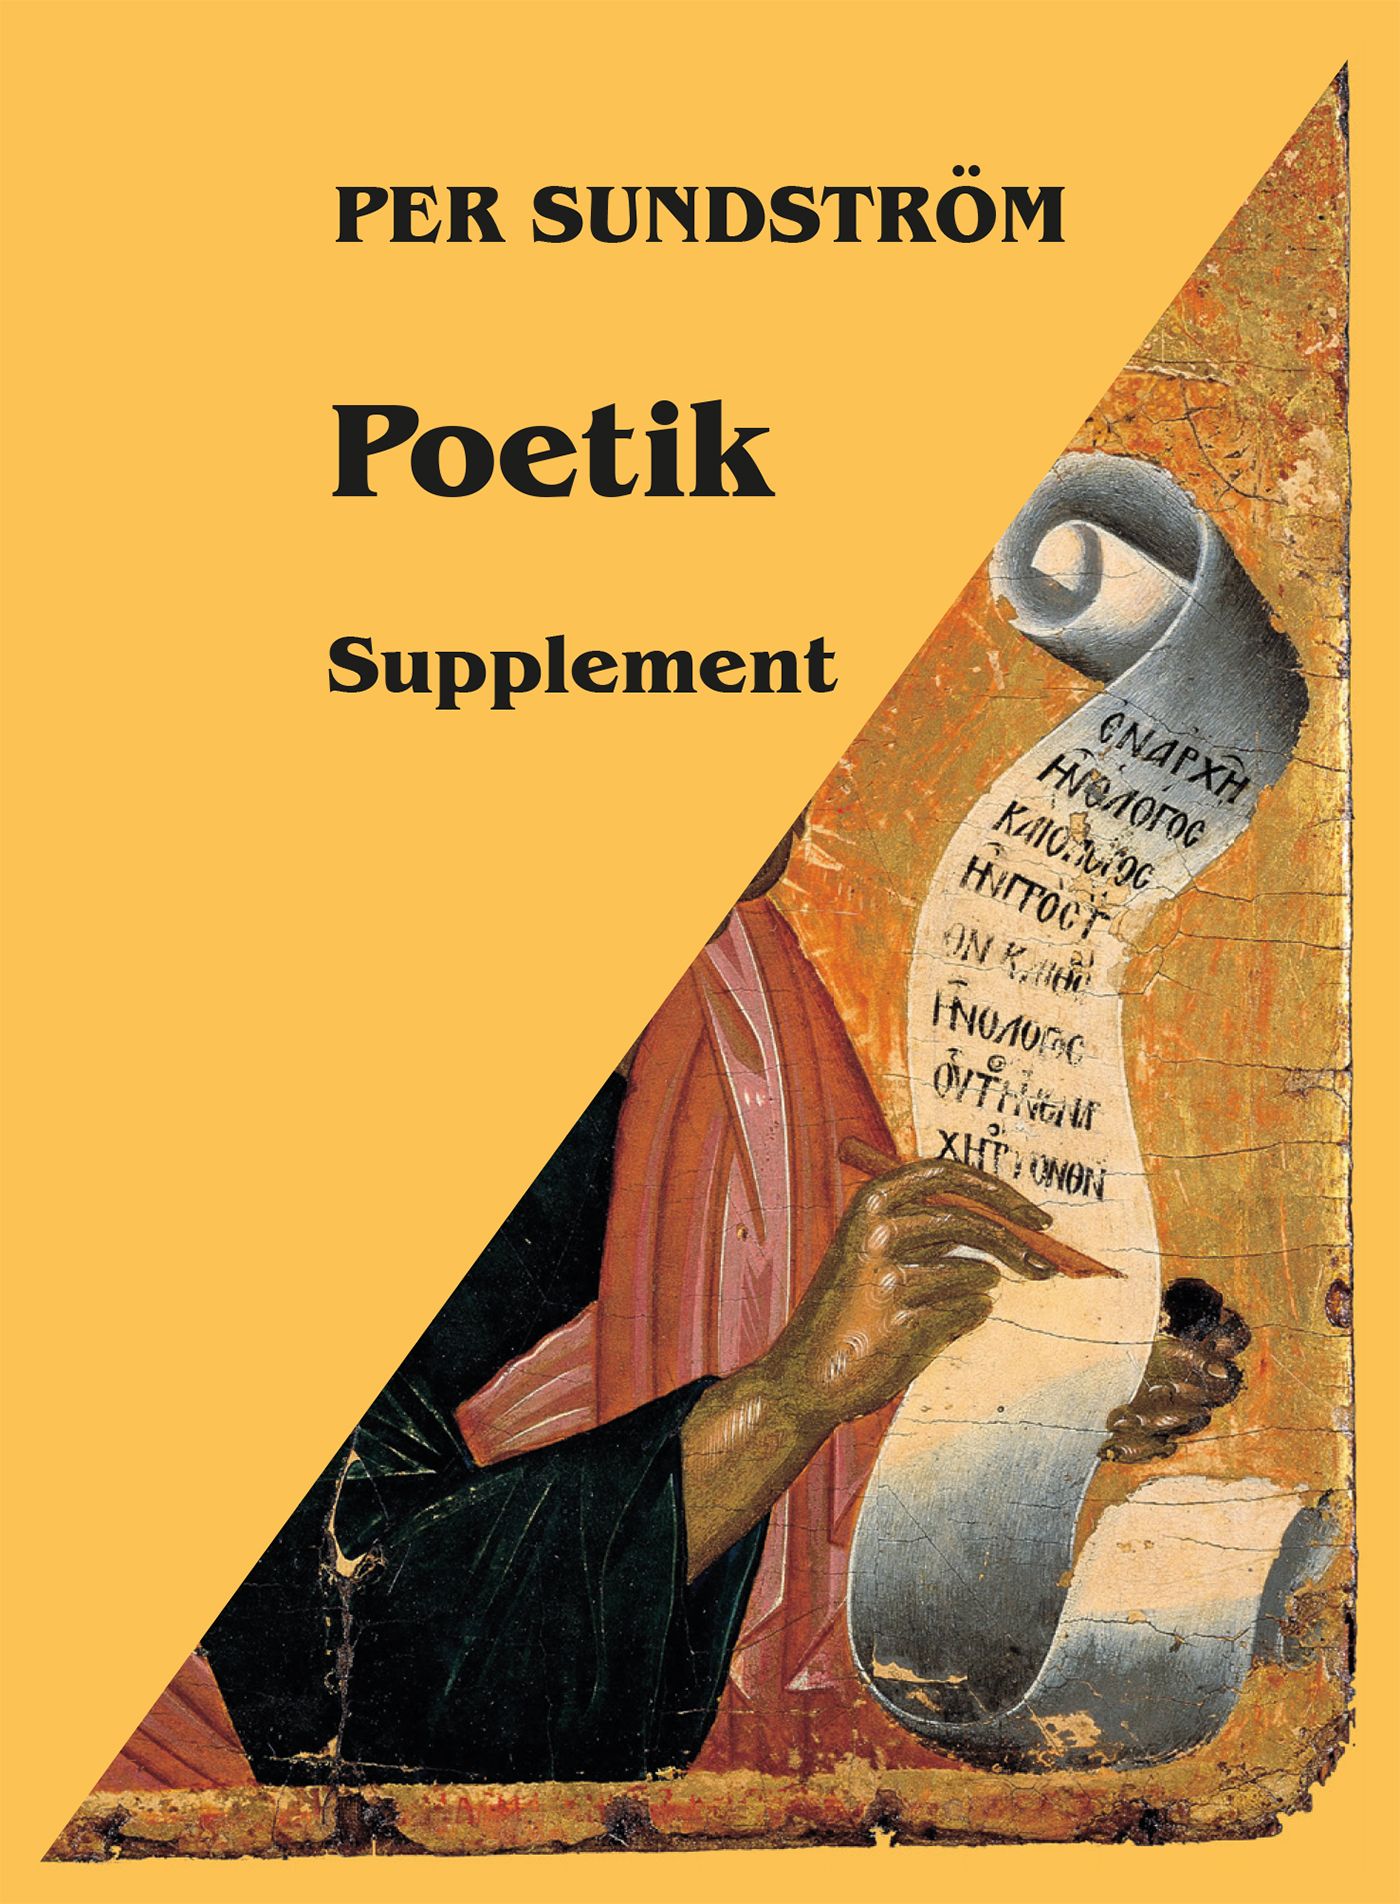 Poetik : Supplement, eBook by Per Sundström